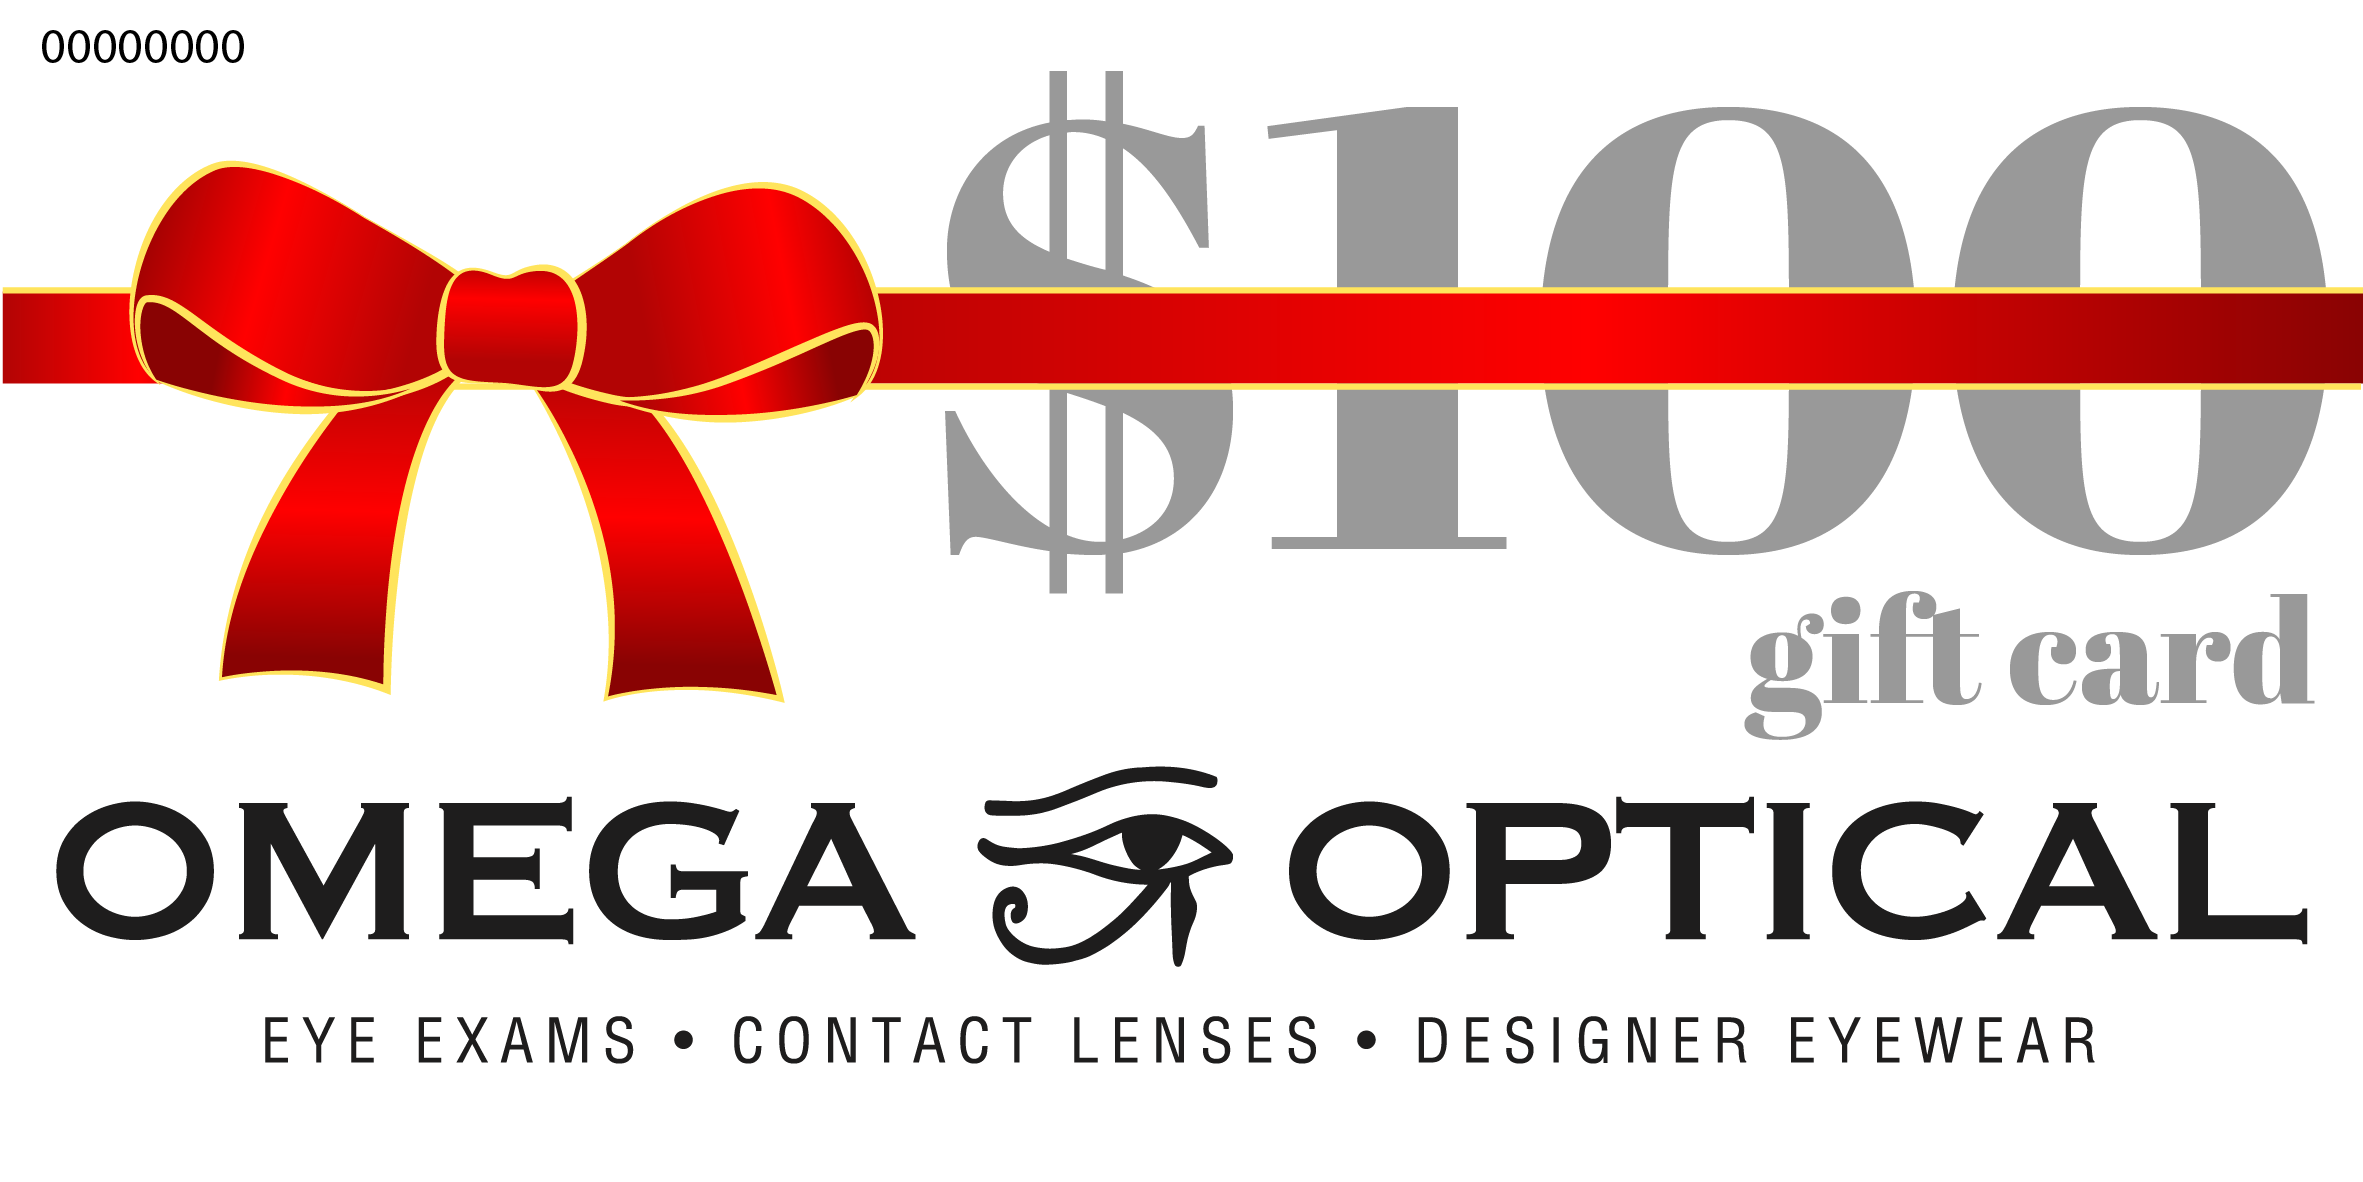 100 Gift Card for 75! Omega Optical Online